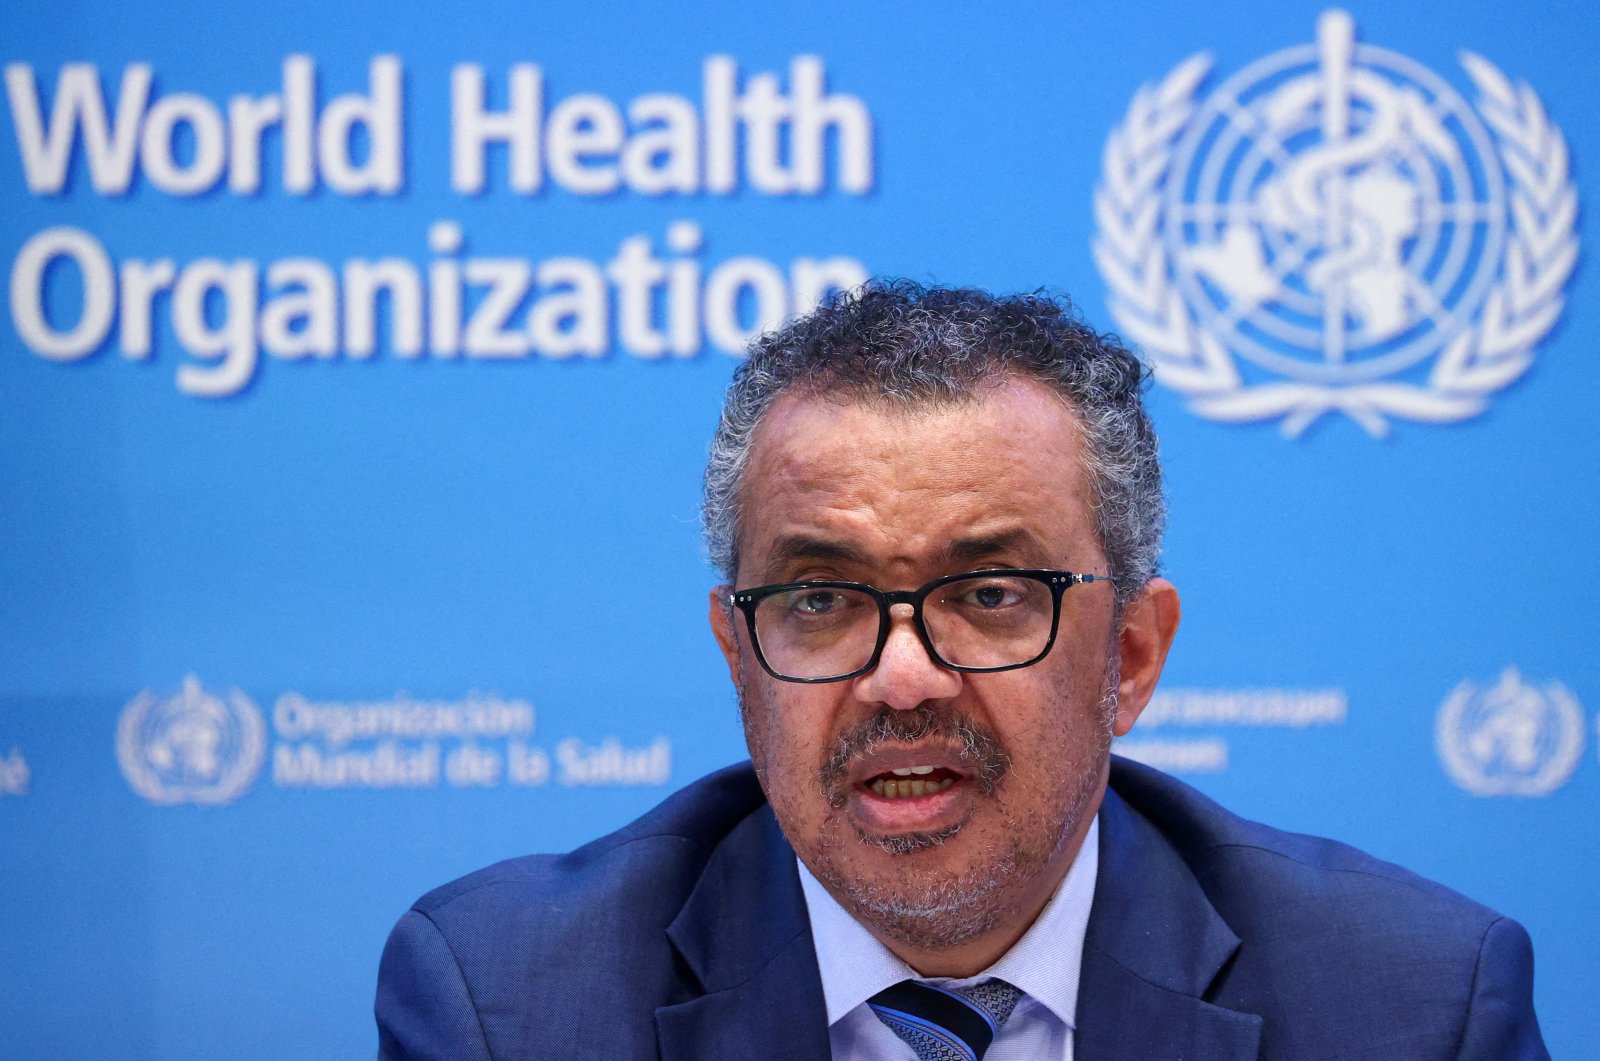 Tedros Adhanom Ghebreyesus, Director-General of the World Health Organization (WHO), speaks during a news conference in Geneva, Switzerland, Dec. 20, 2021. (Reuters Photo)